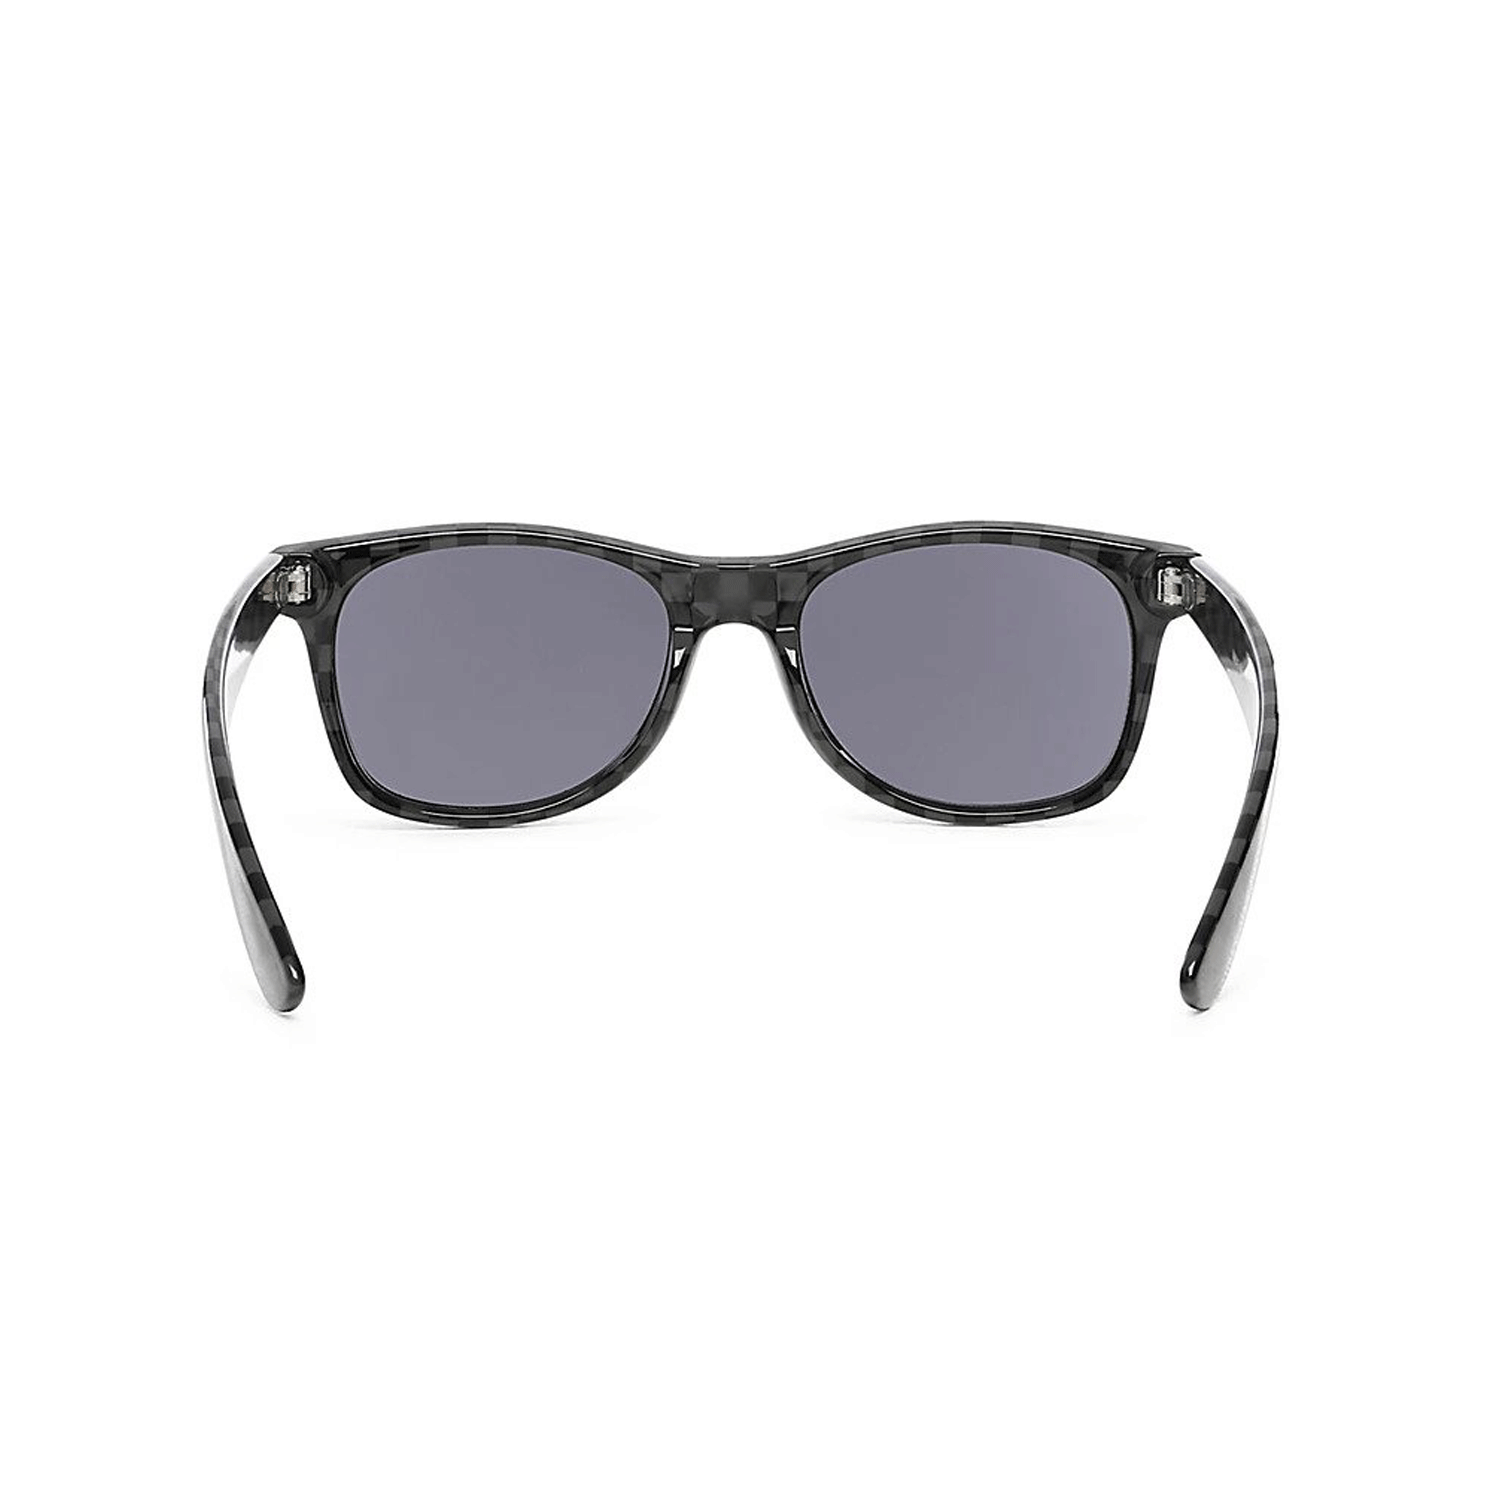 Vans - Spicoli Sunglasses - Black/Charcoal